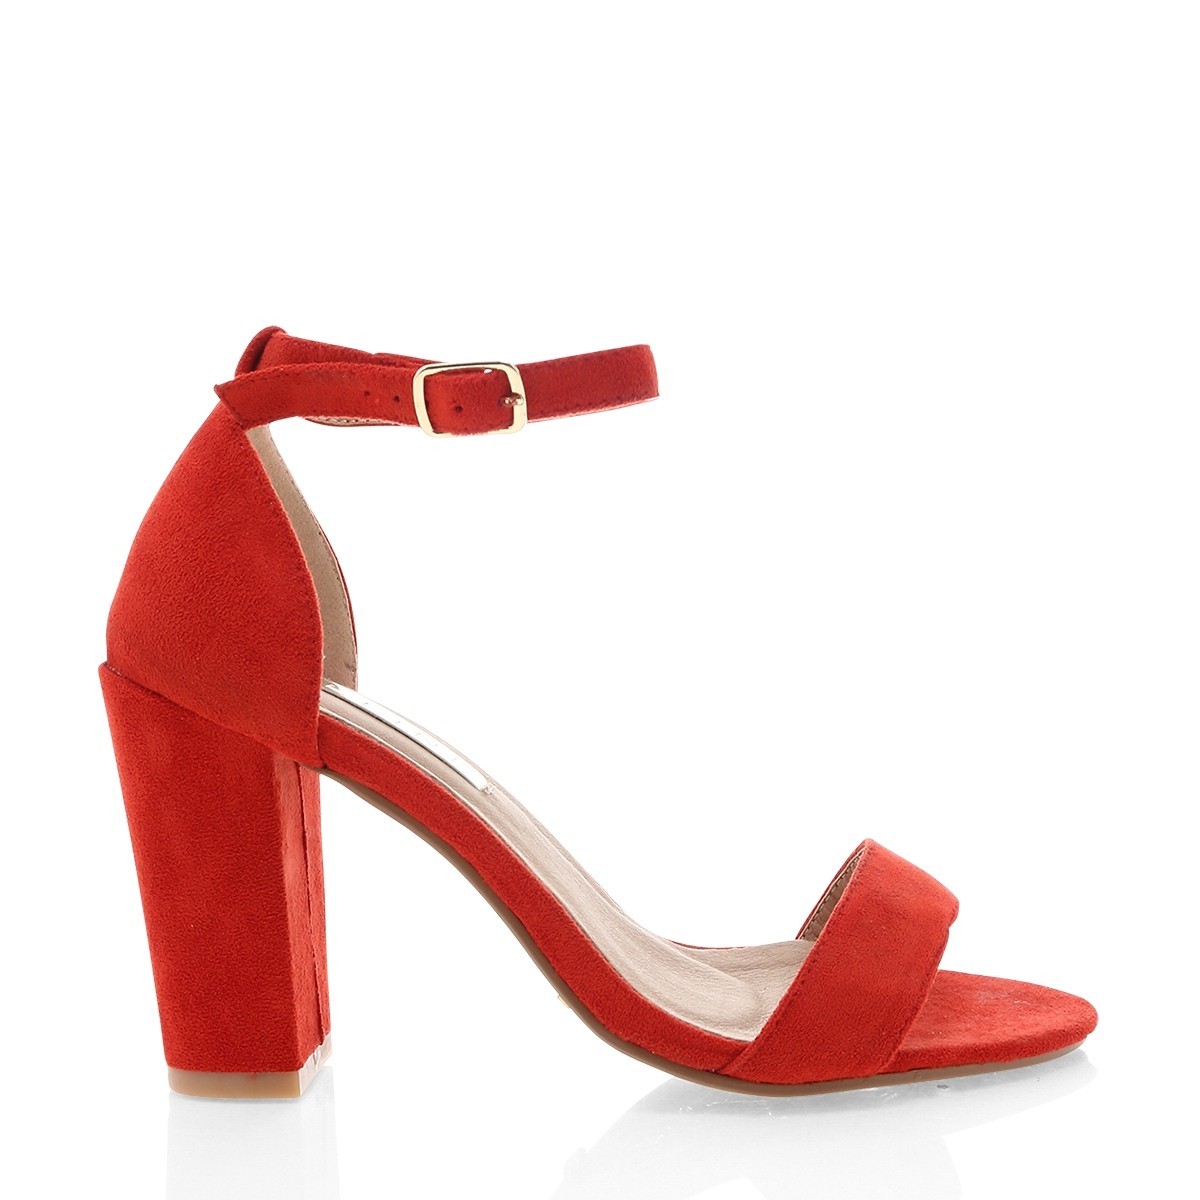 Aurella Red Suede by Billini Shoes on Sale | ShoeSales